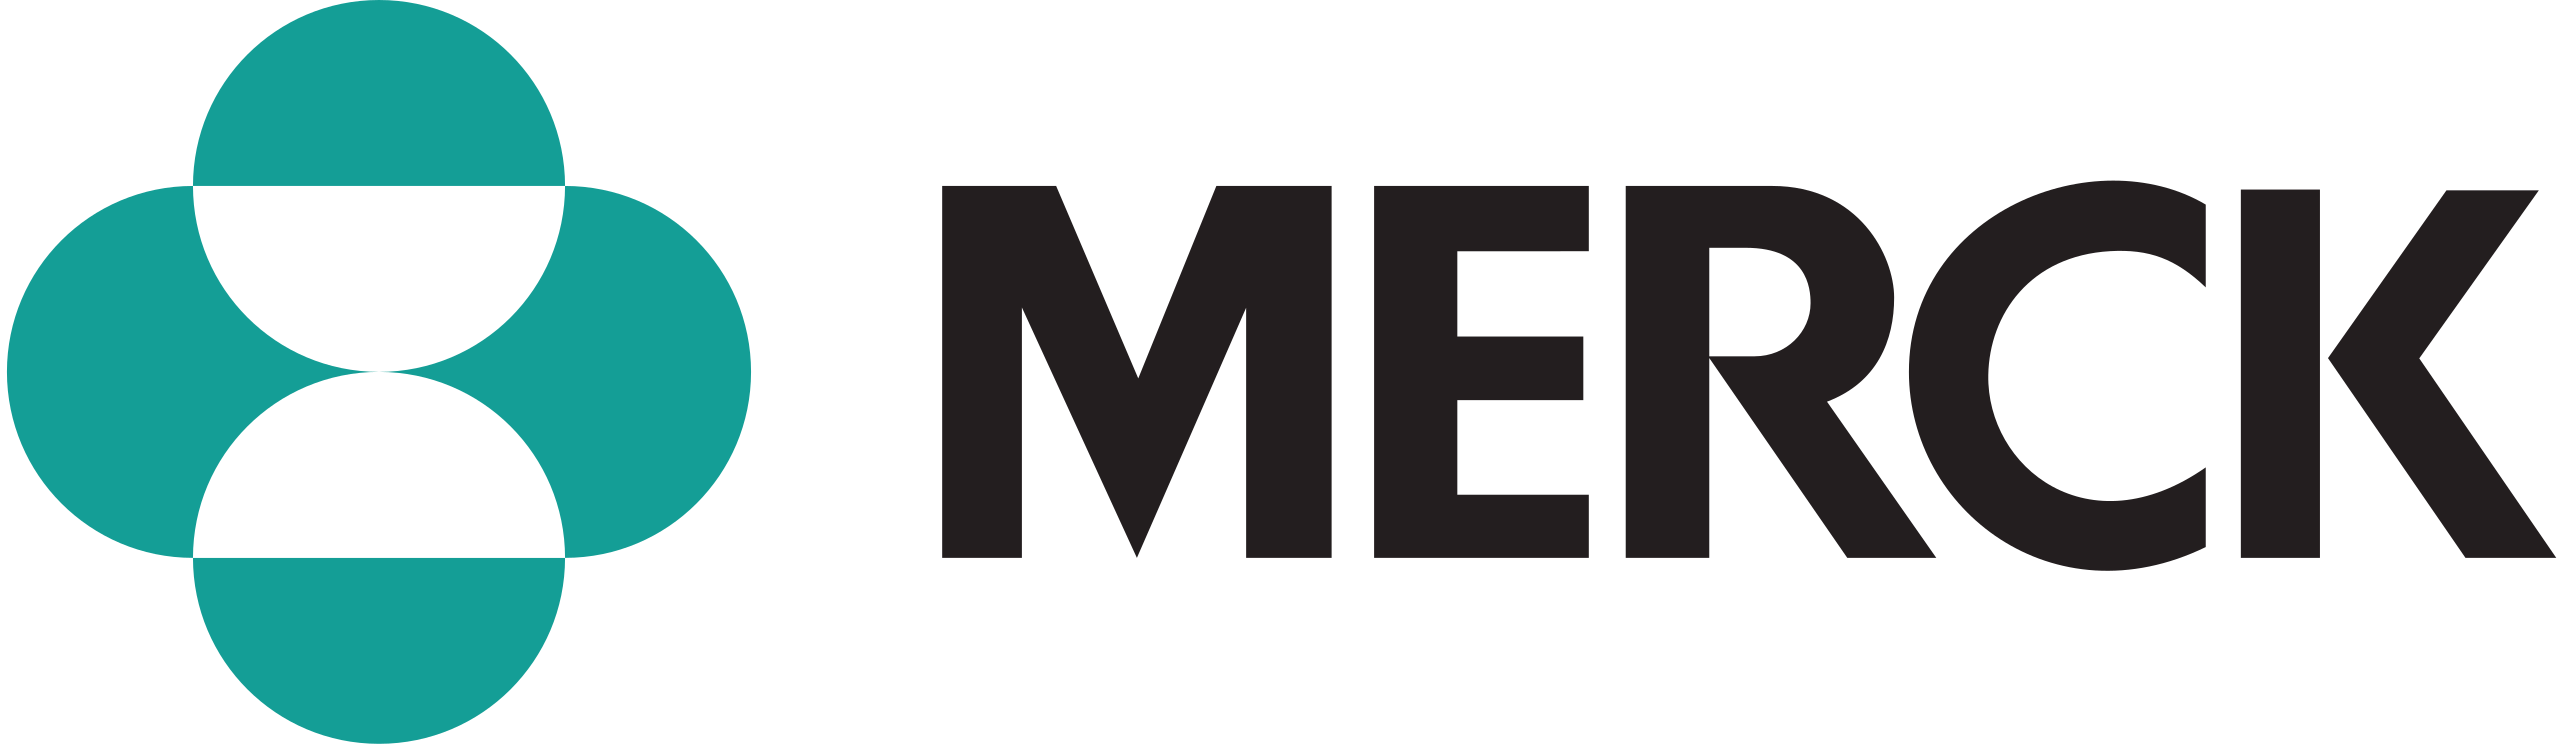 Merck_&_Co.svg